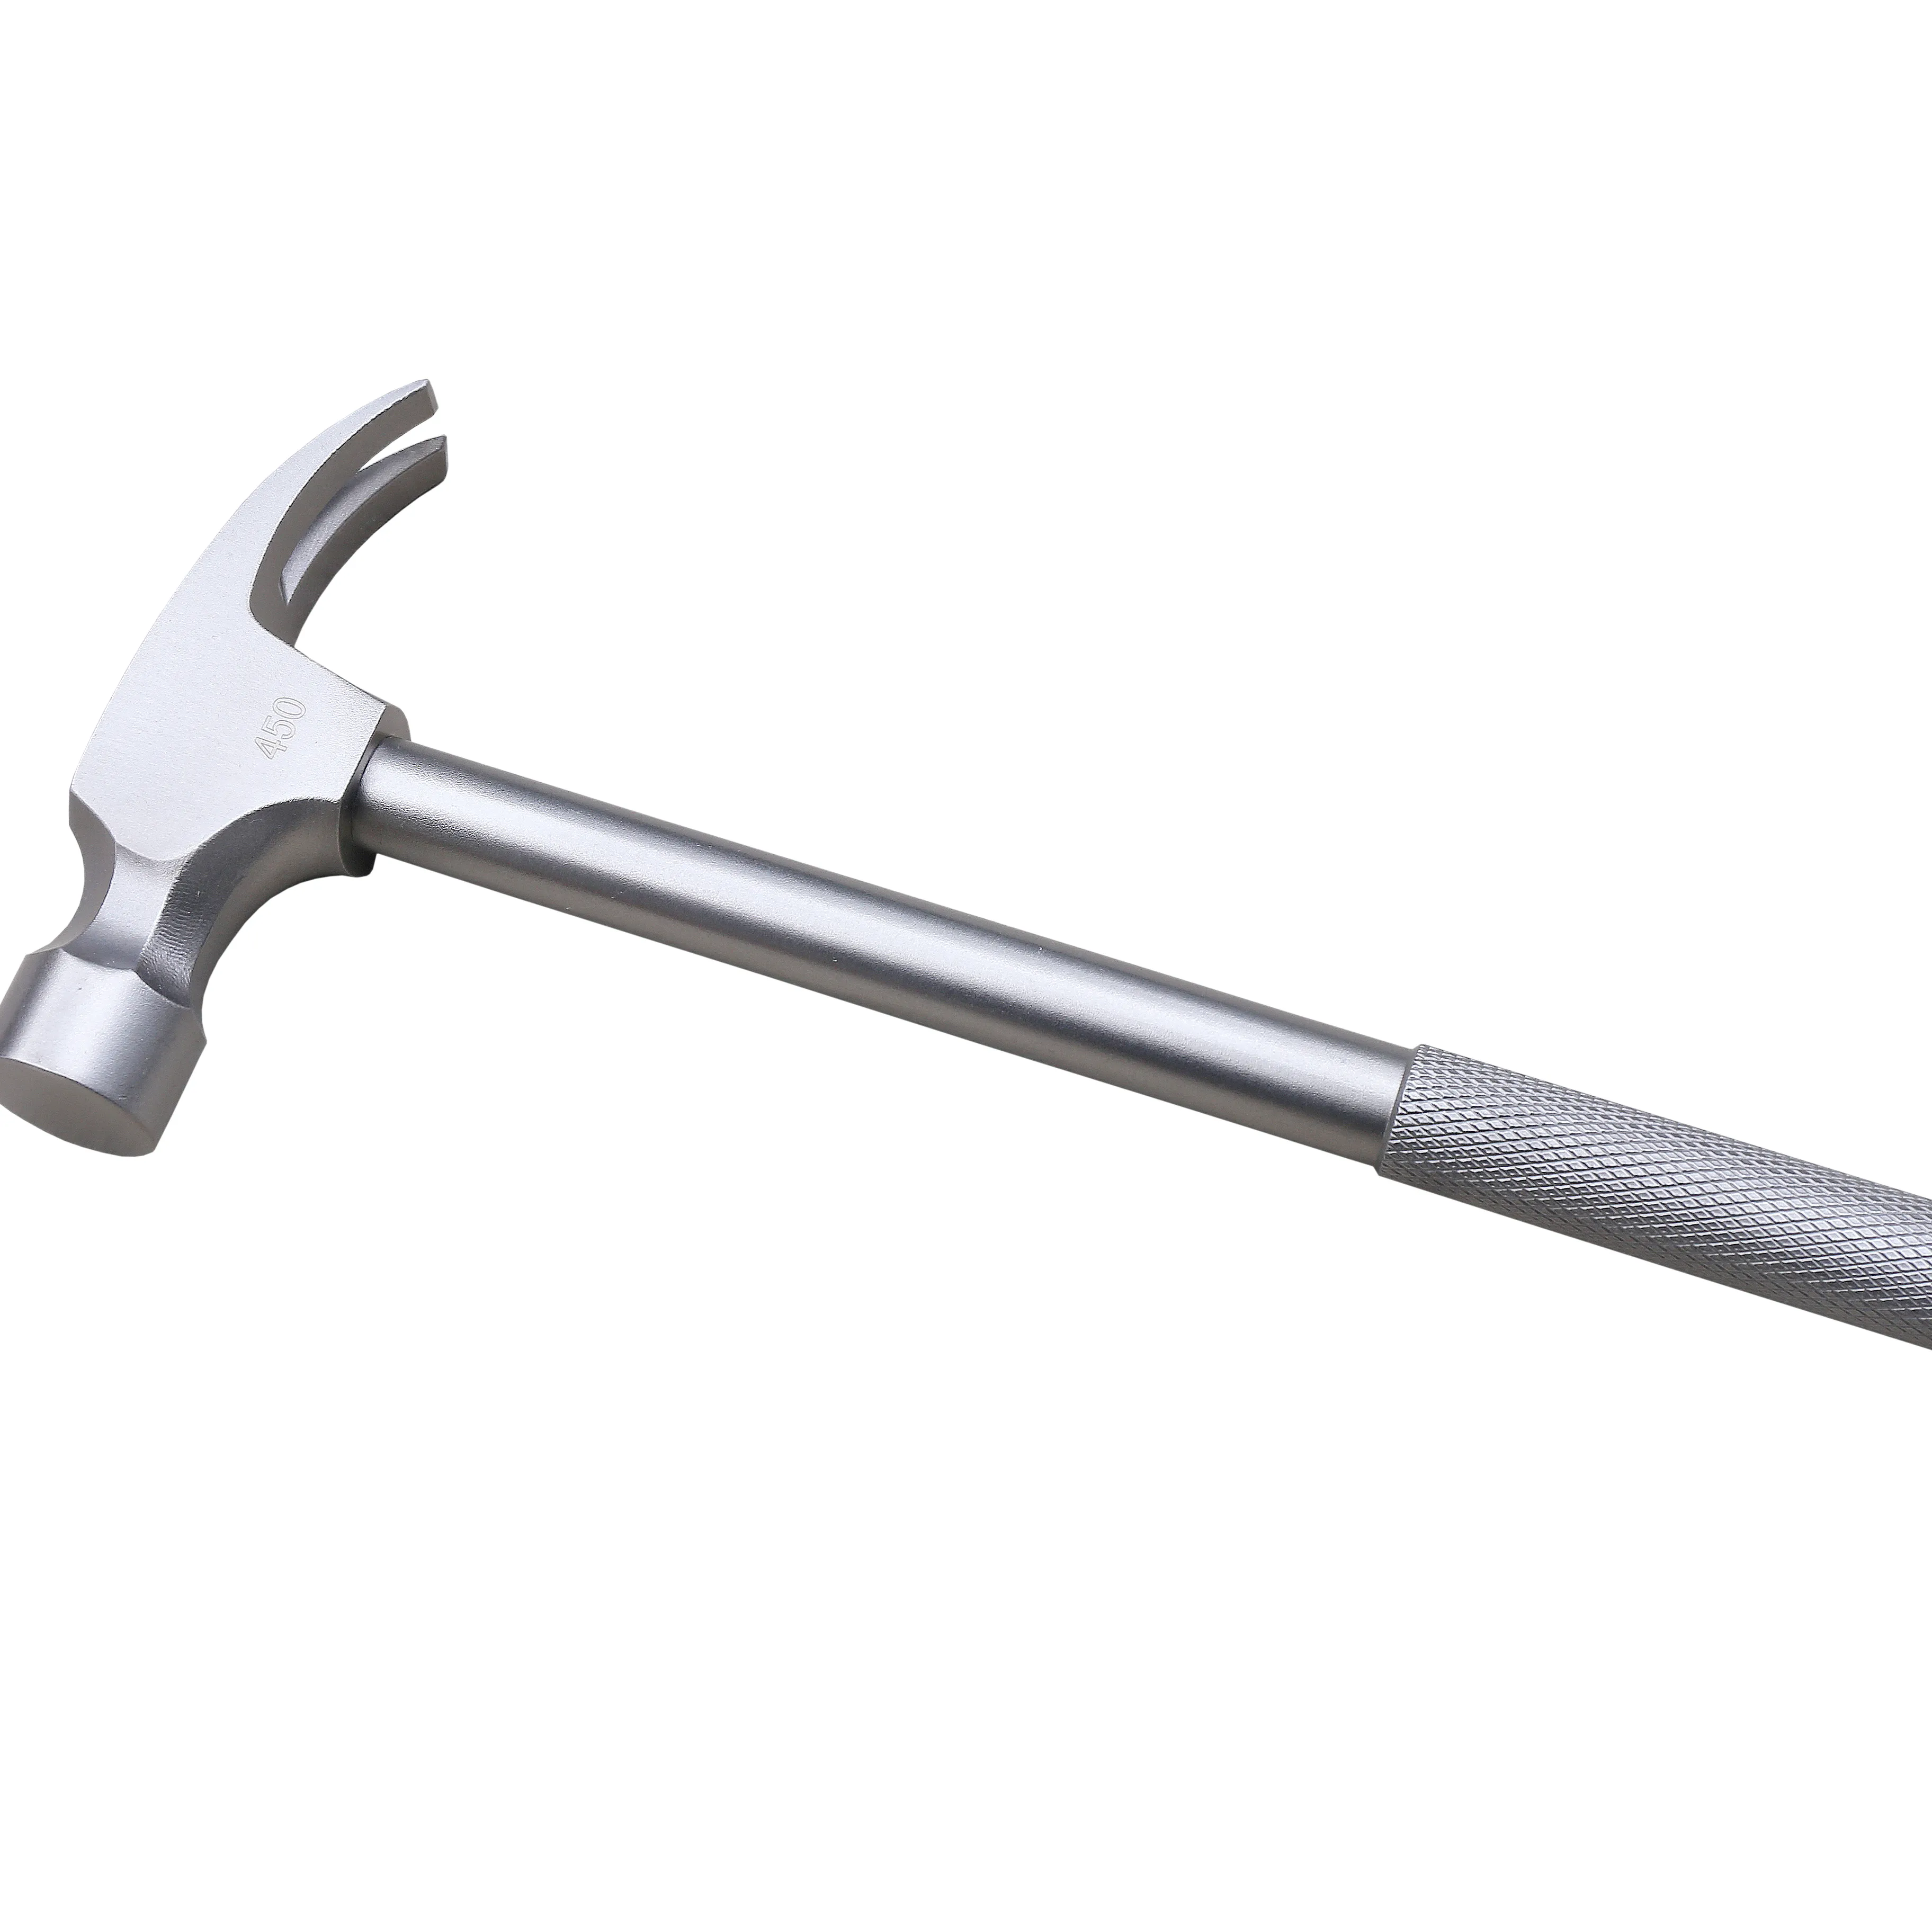 X-SPARK Non-sparking Titanium Claw Hammer, ferramentas de construção, Aero Space Work 1lb 310mm